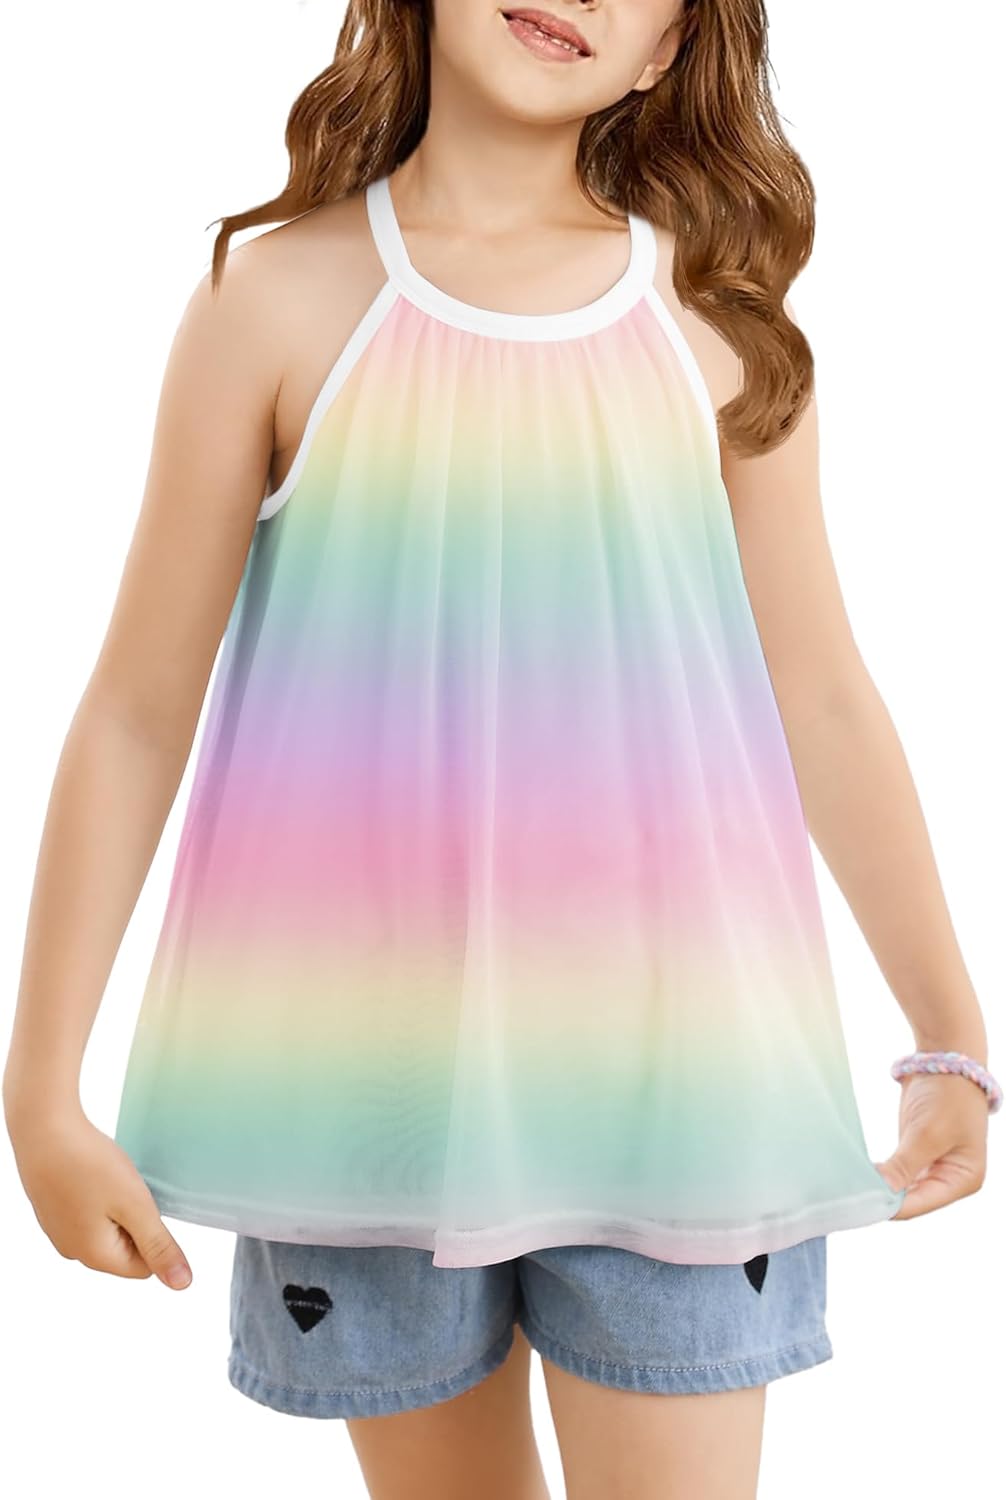 Ivicoer Girls Flowy Tops Cute Summer Sleeveless Shirts Kids Fashion Halter Tops Size 3-10 Years